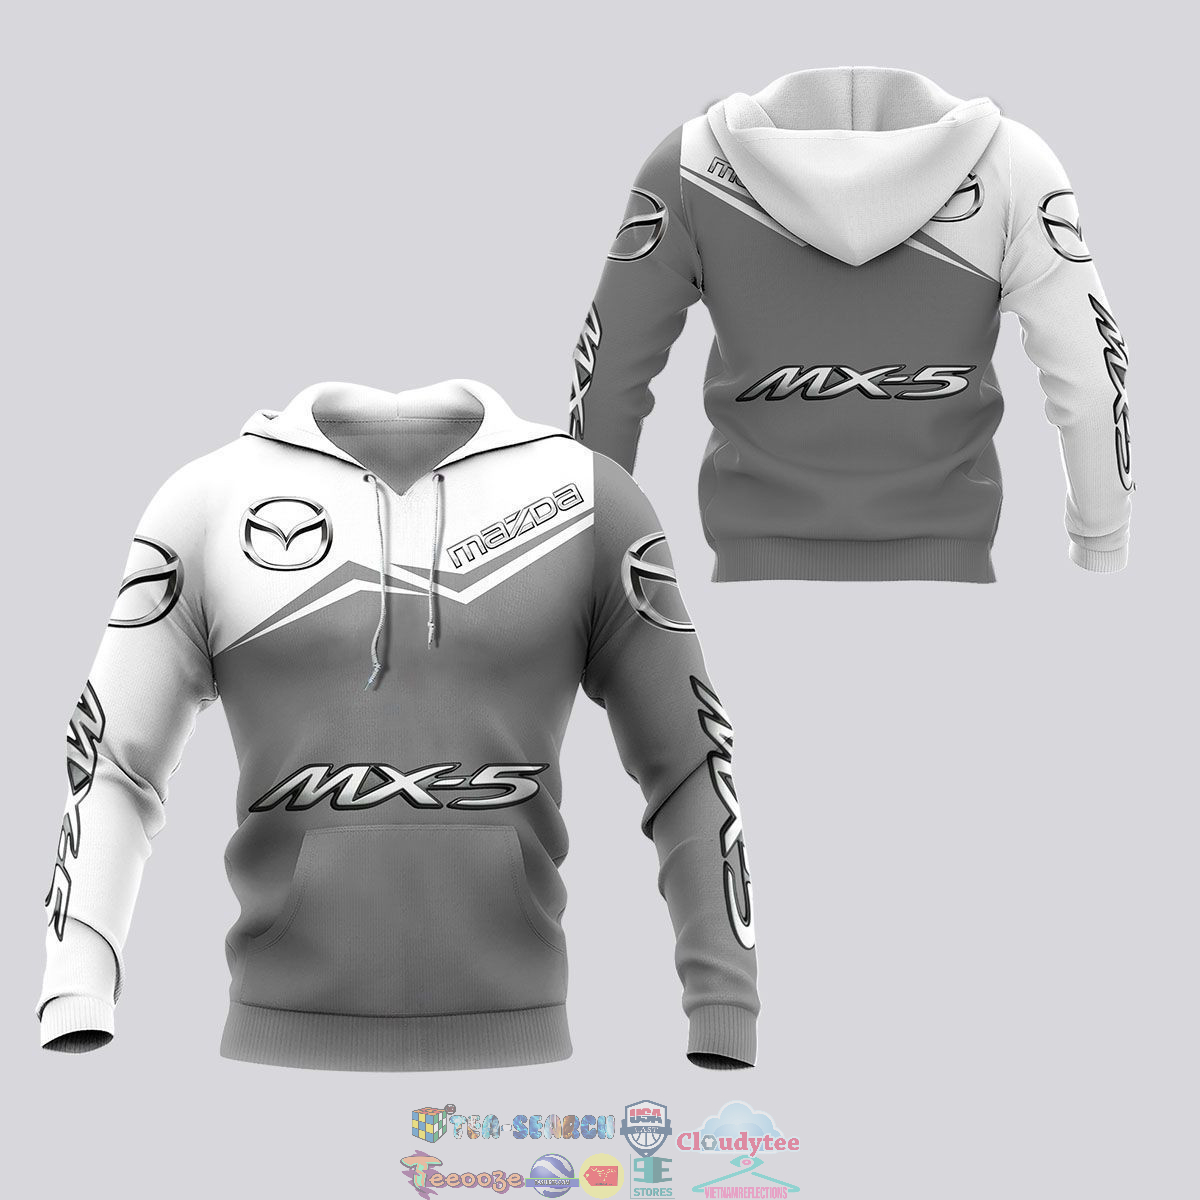 Mazda MX-5 ver 2 3D hoodie and t-shirt – Saleoff